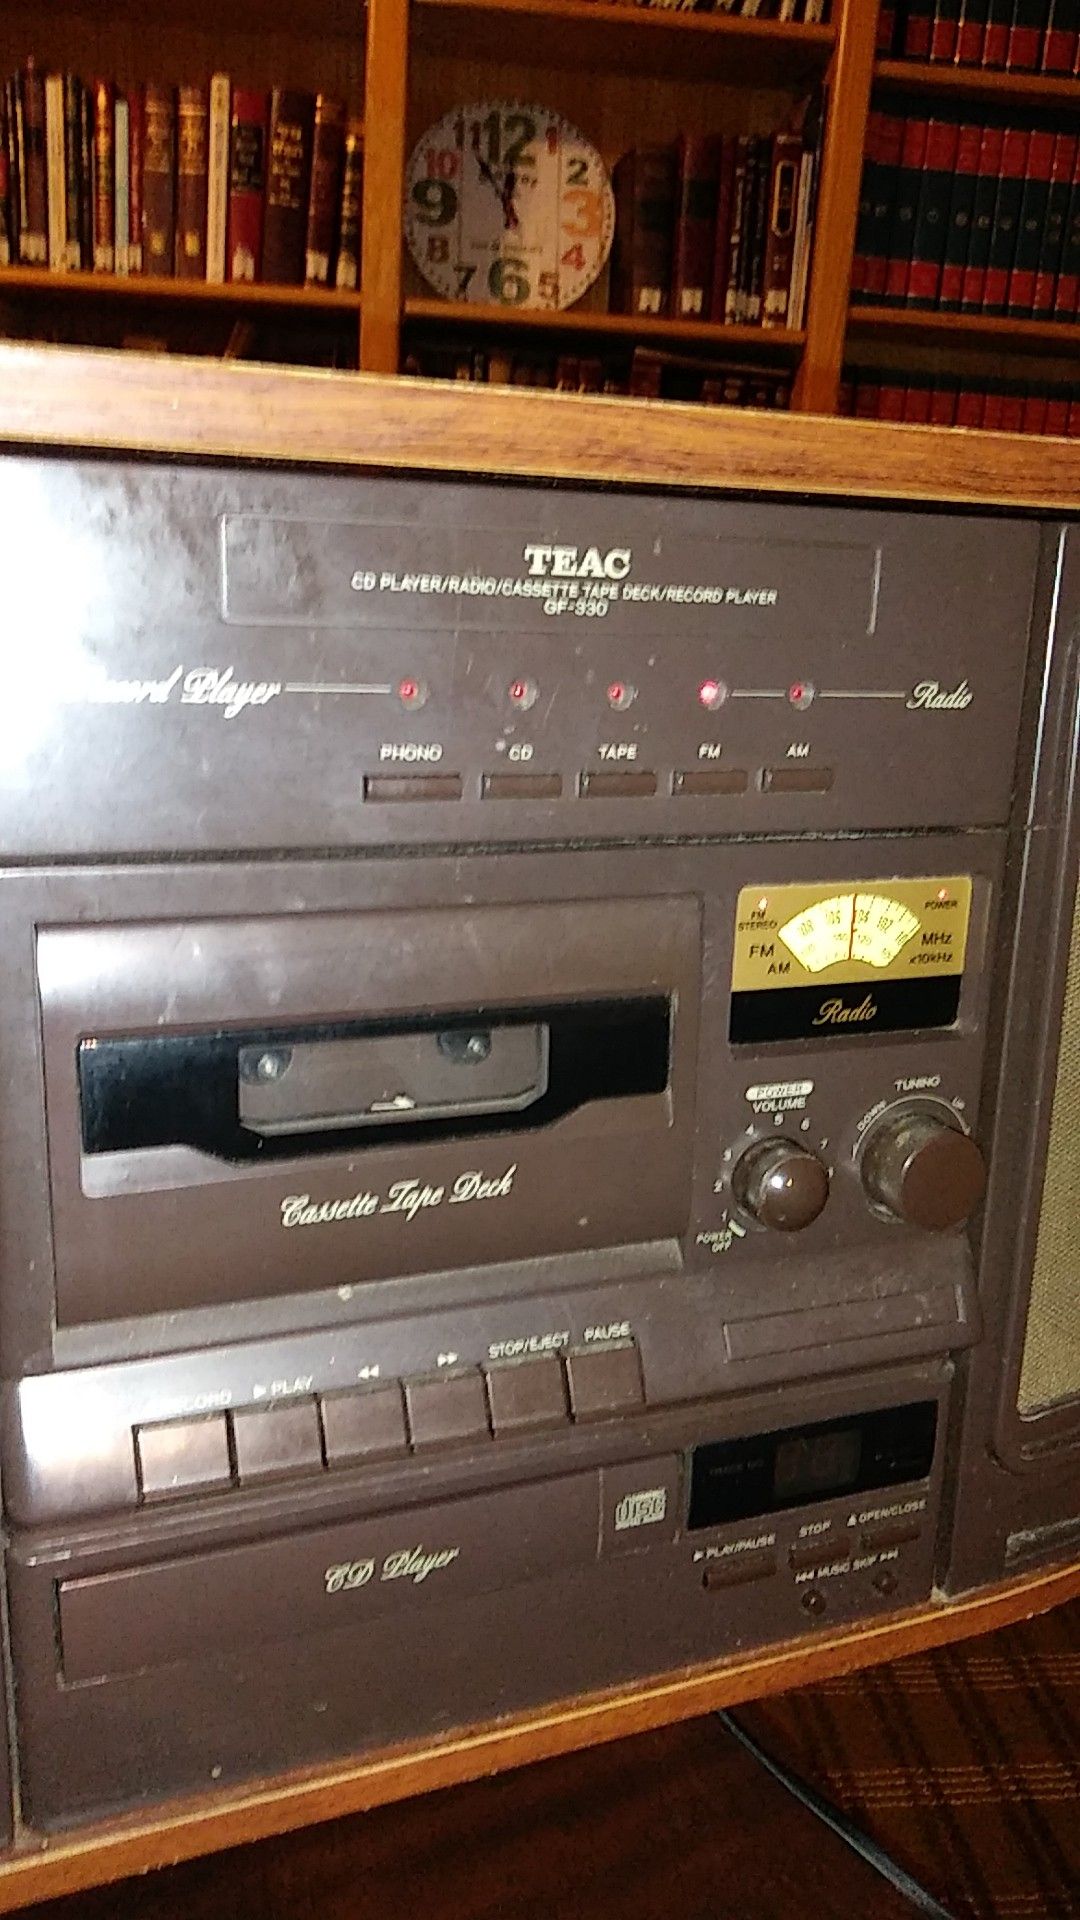 Teac GF-330 Vintage Compact Hi-Fi Stereo System